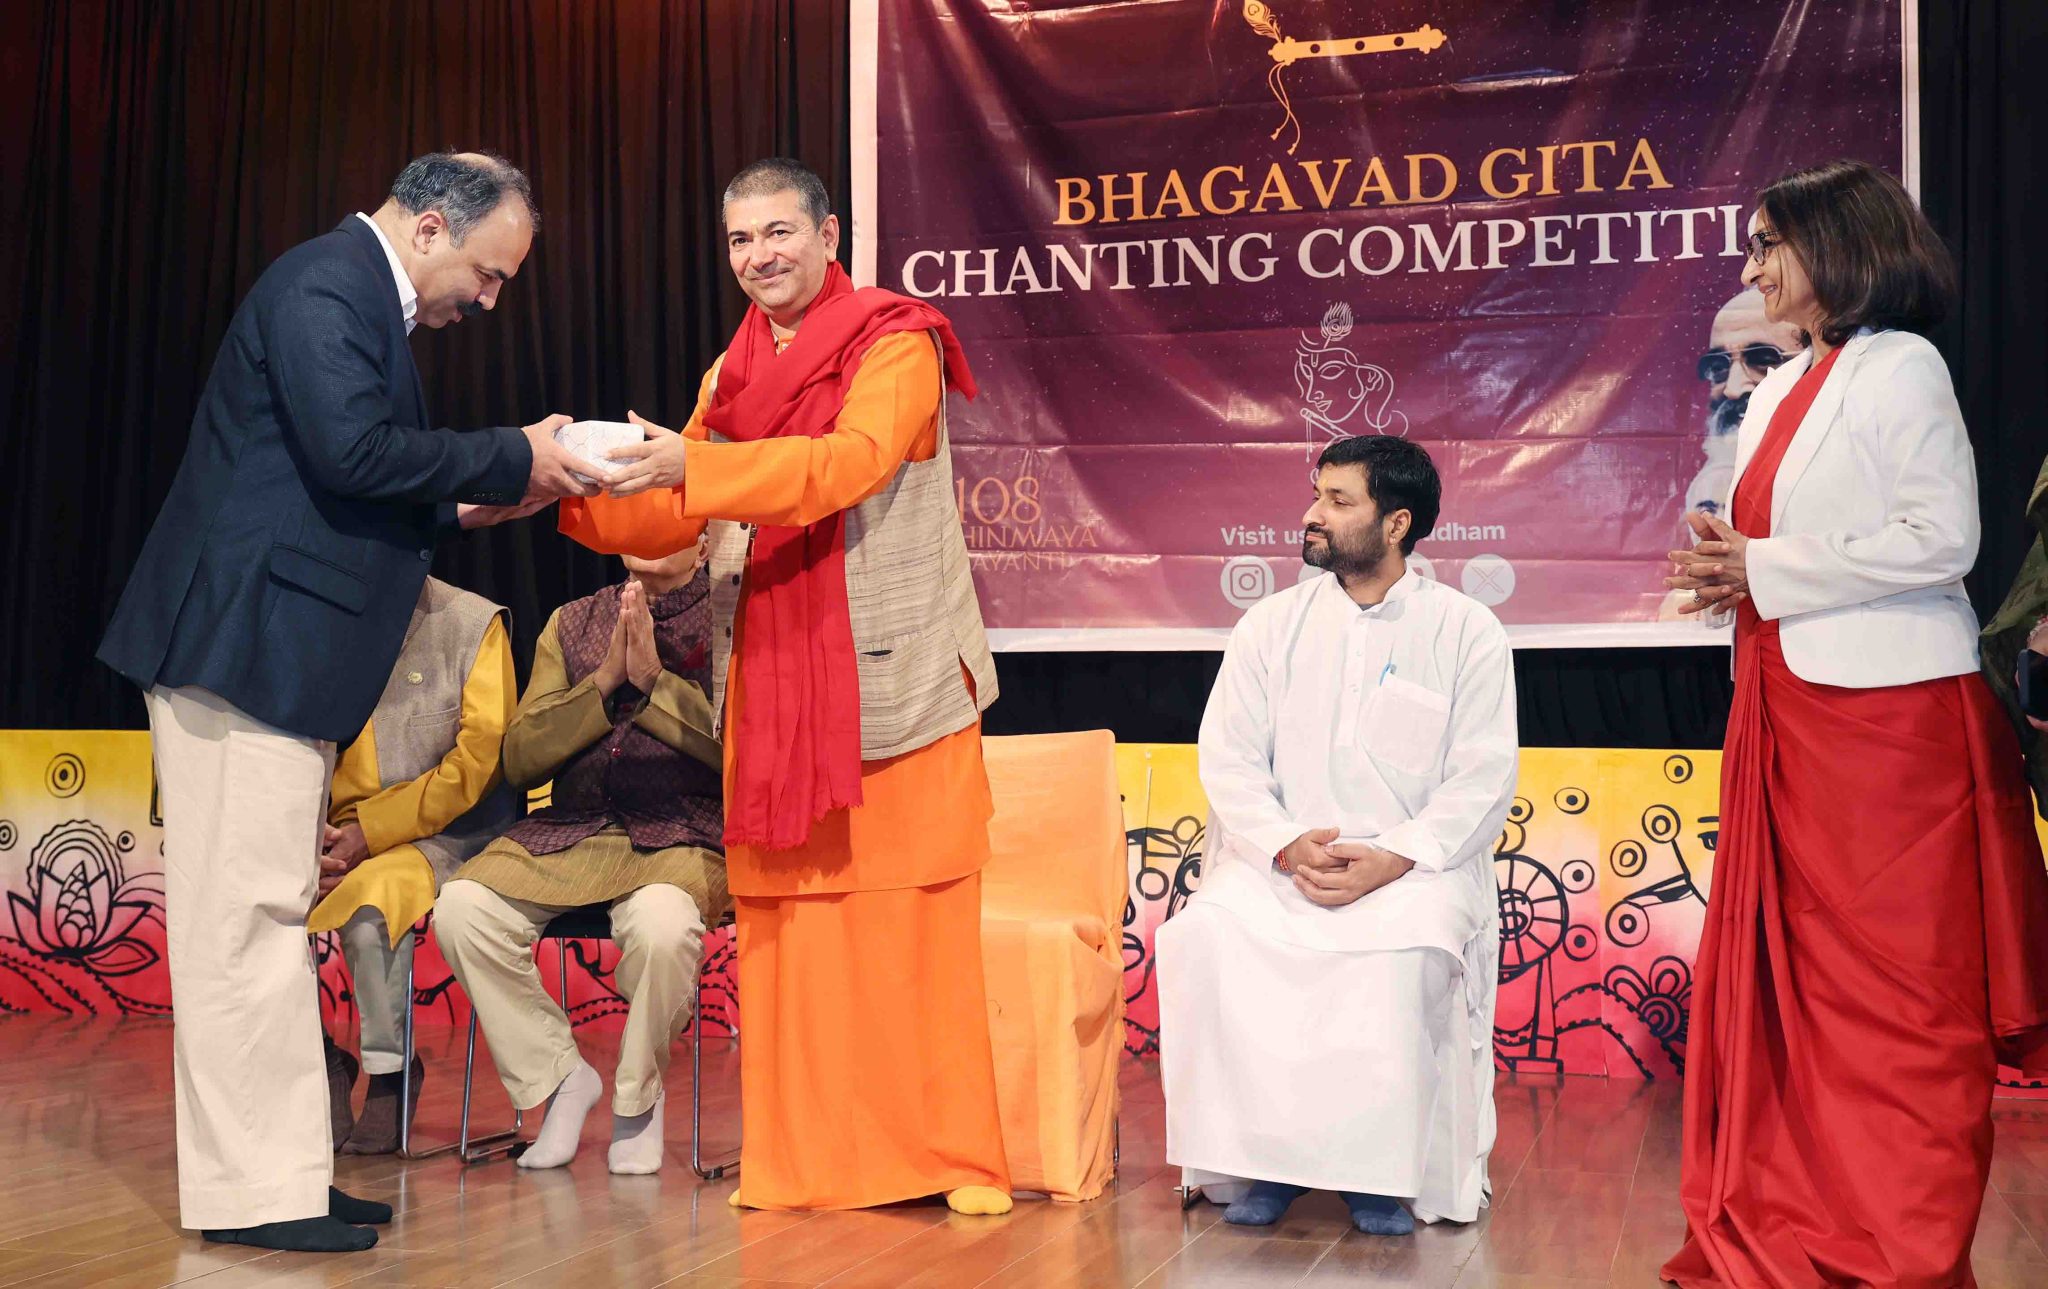 Bhagavad Gita recitation competition